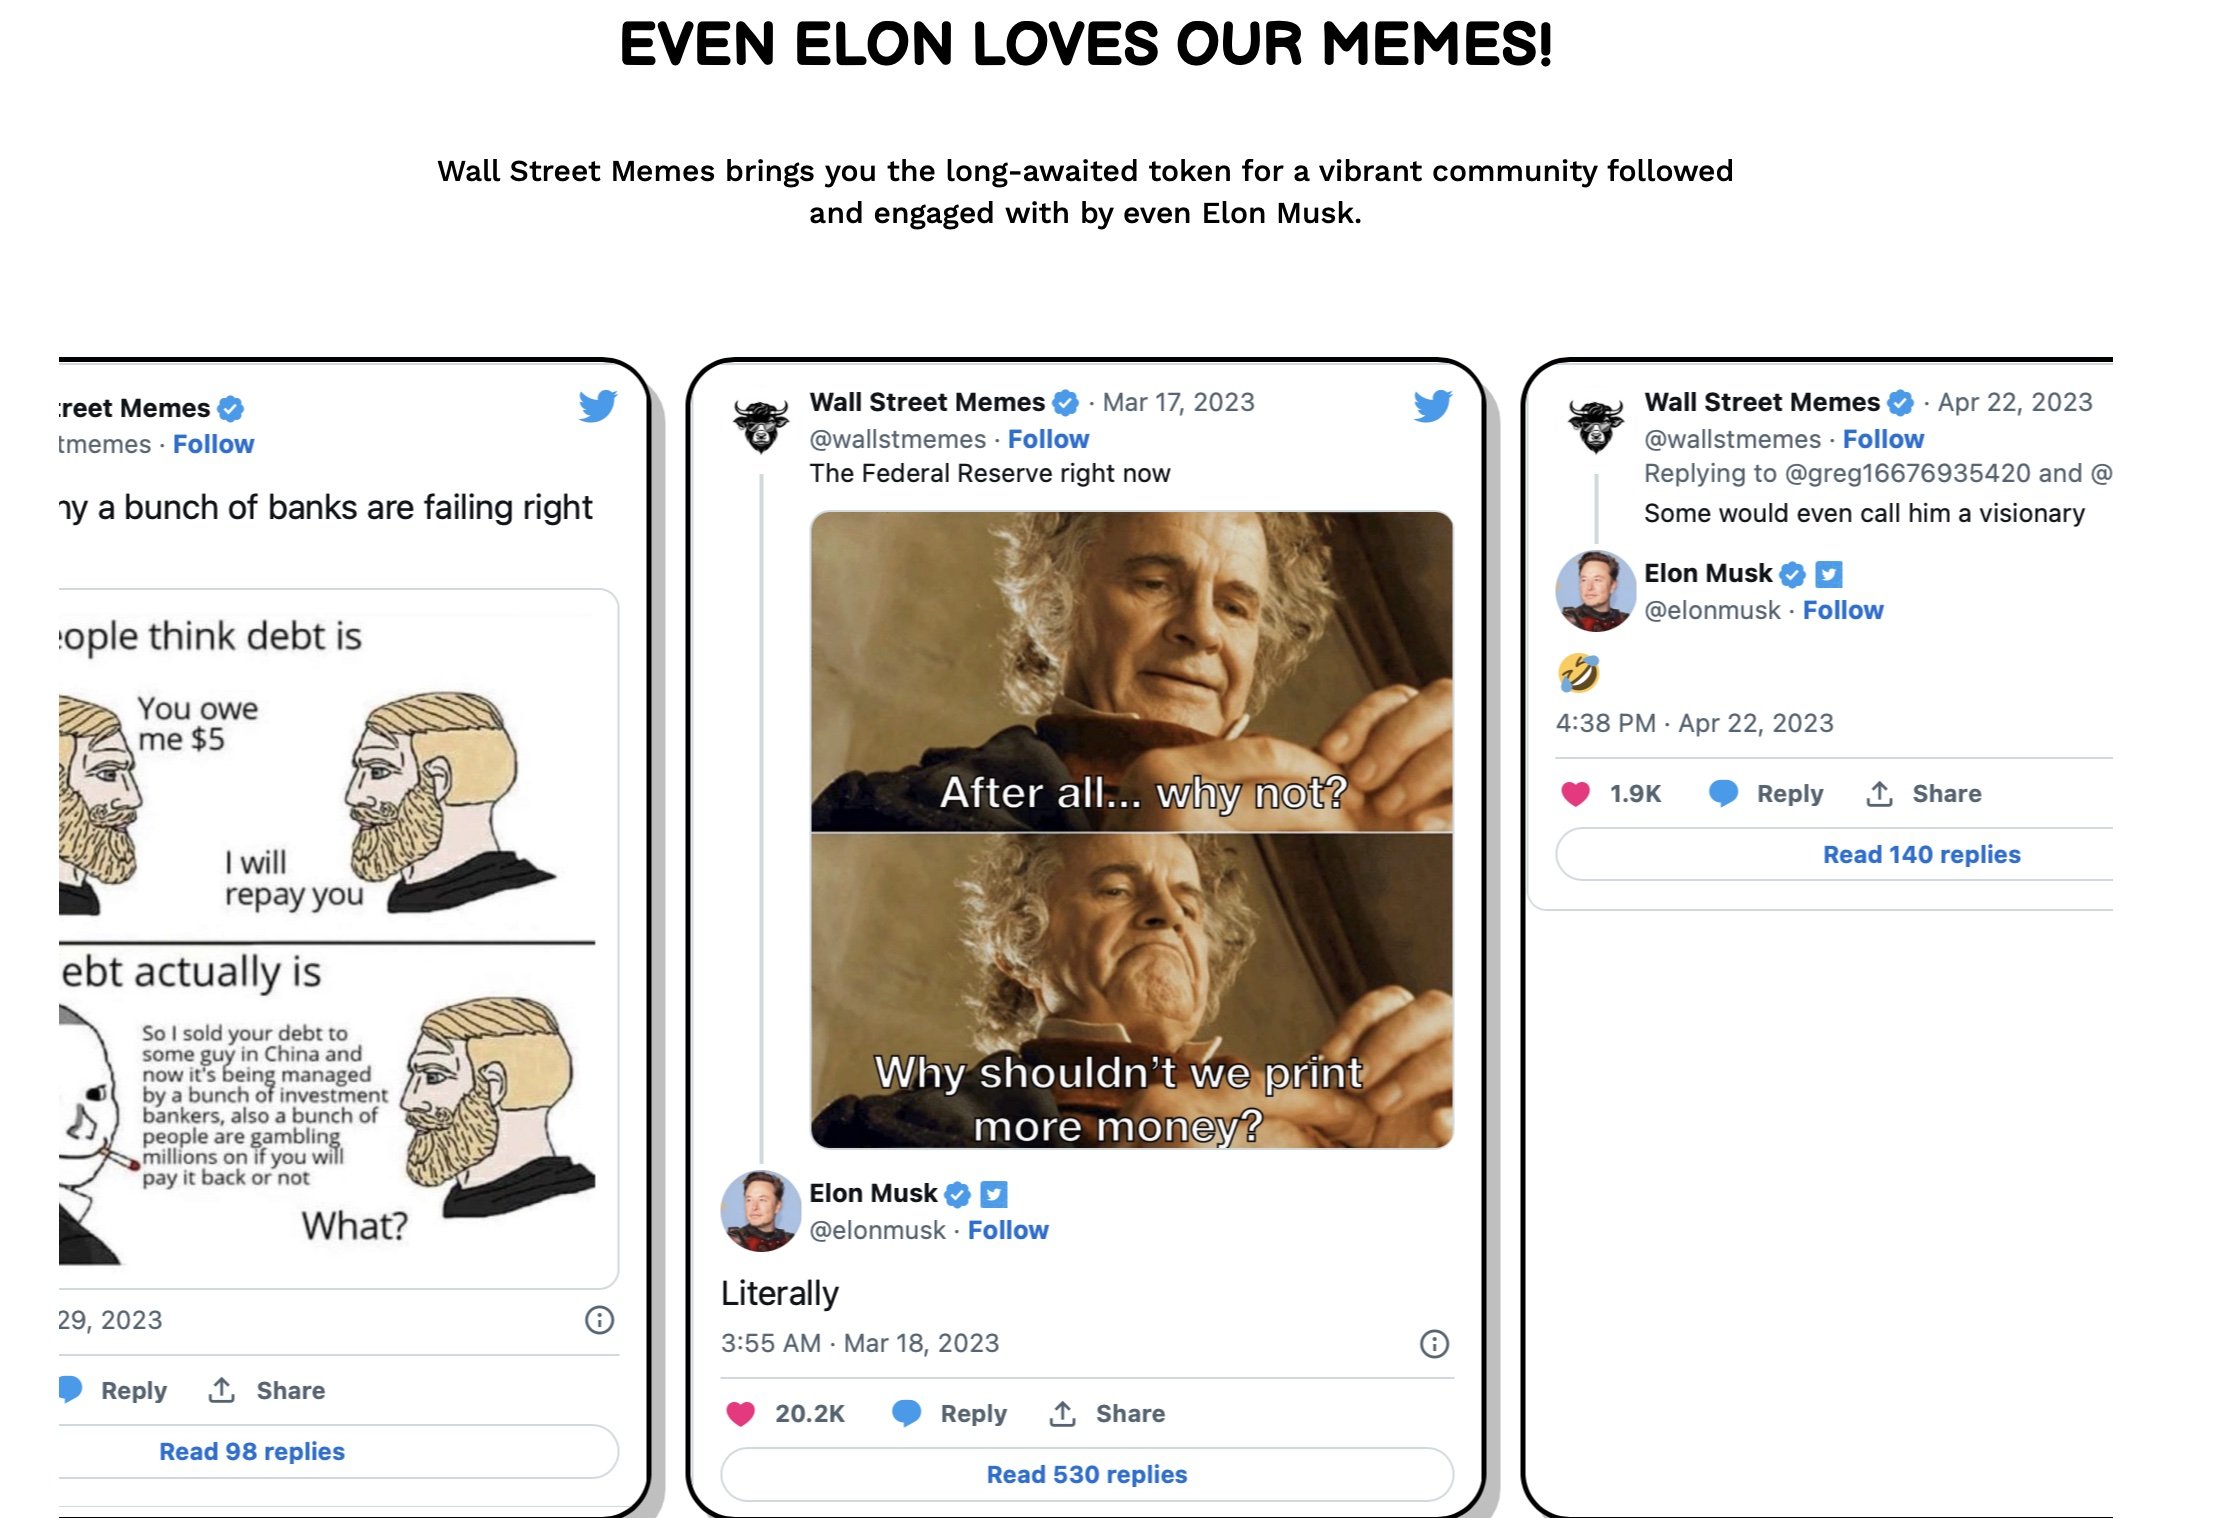 Elon Musk loves Wall Street Memes